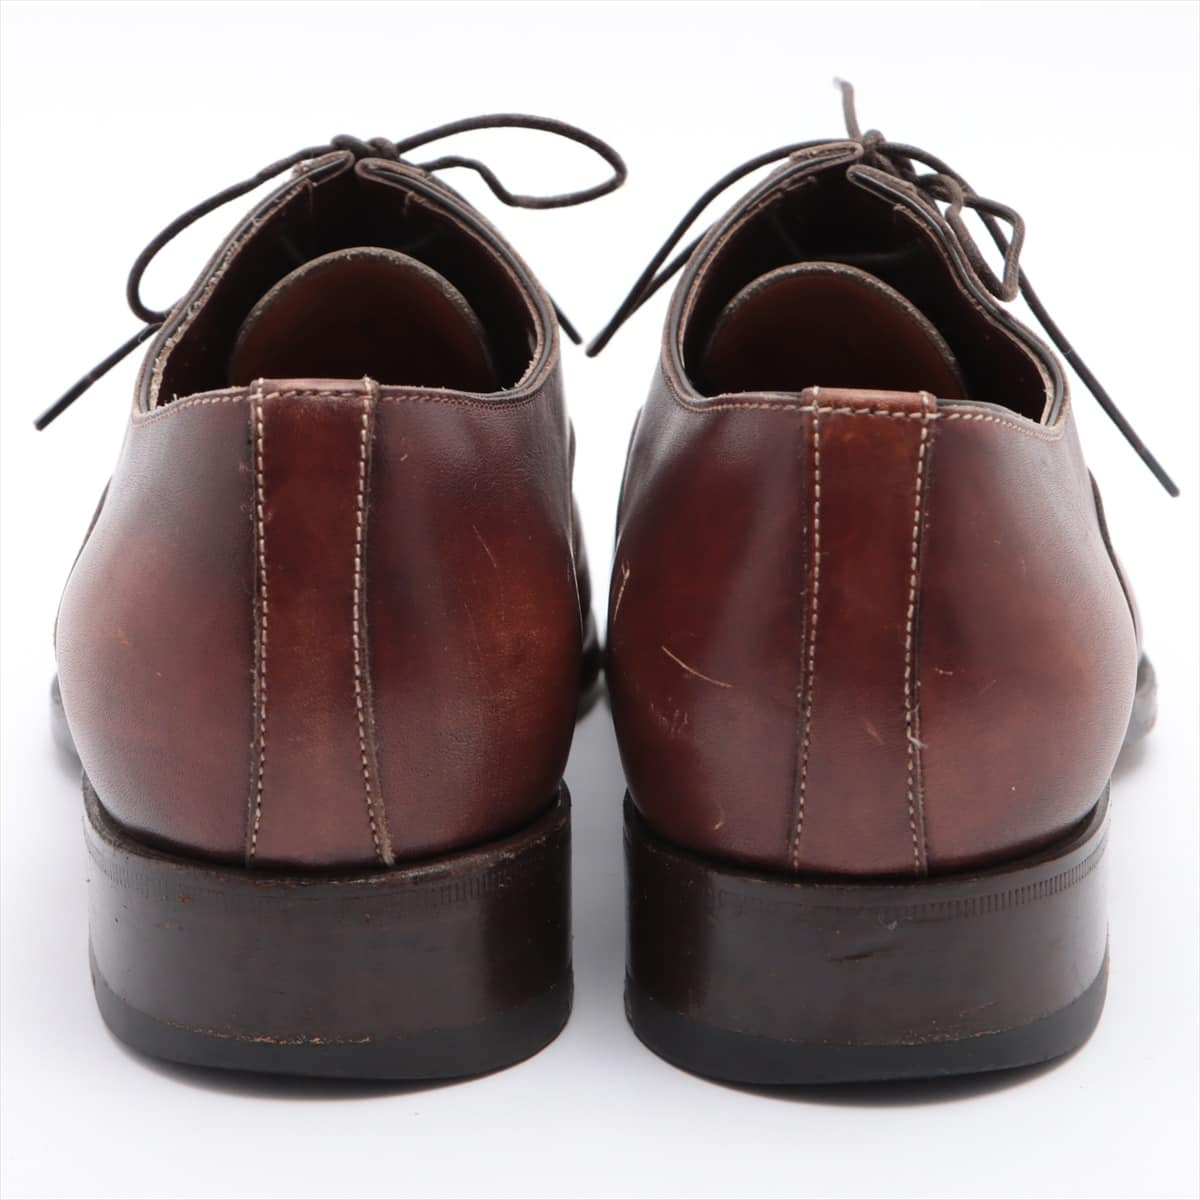 Santoni Leather Leather shoes 5.5 Men's Brown